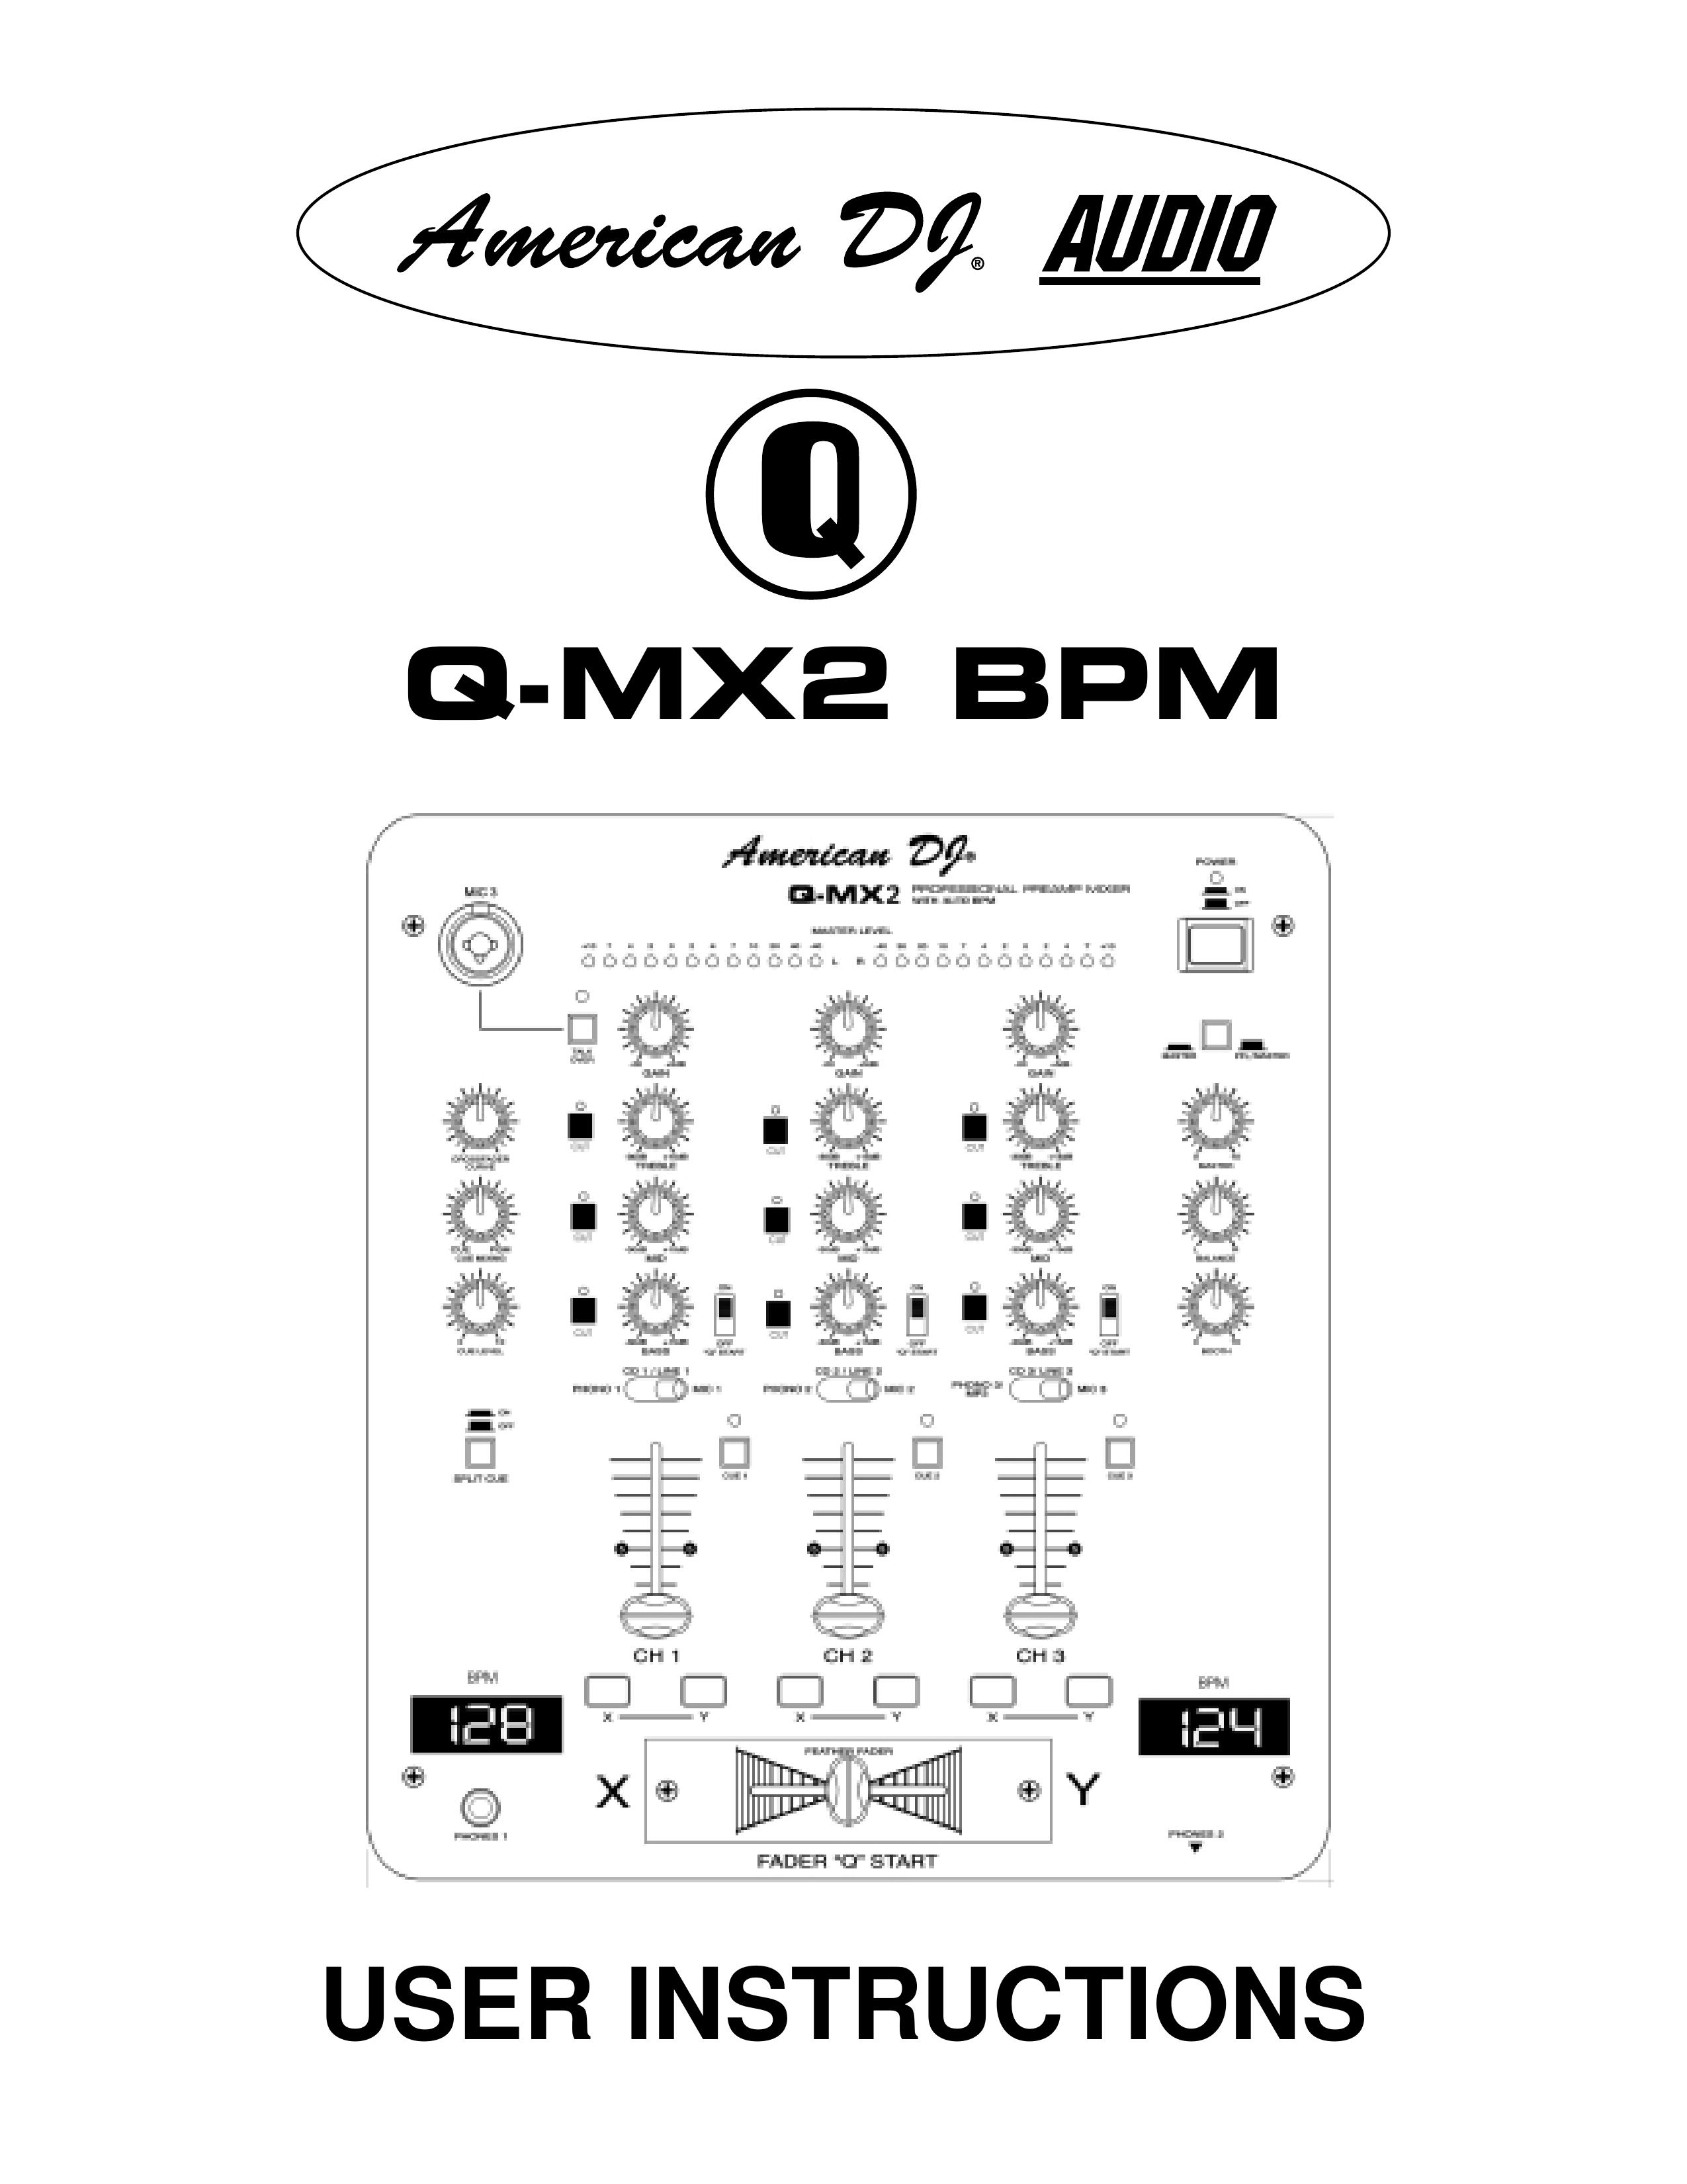 American Audio Q-MX2 BPM Music Mixer User Manual